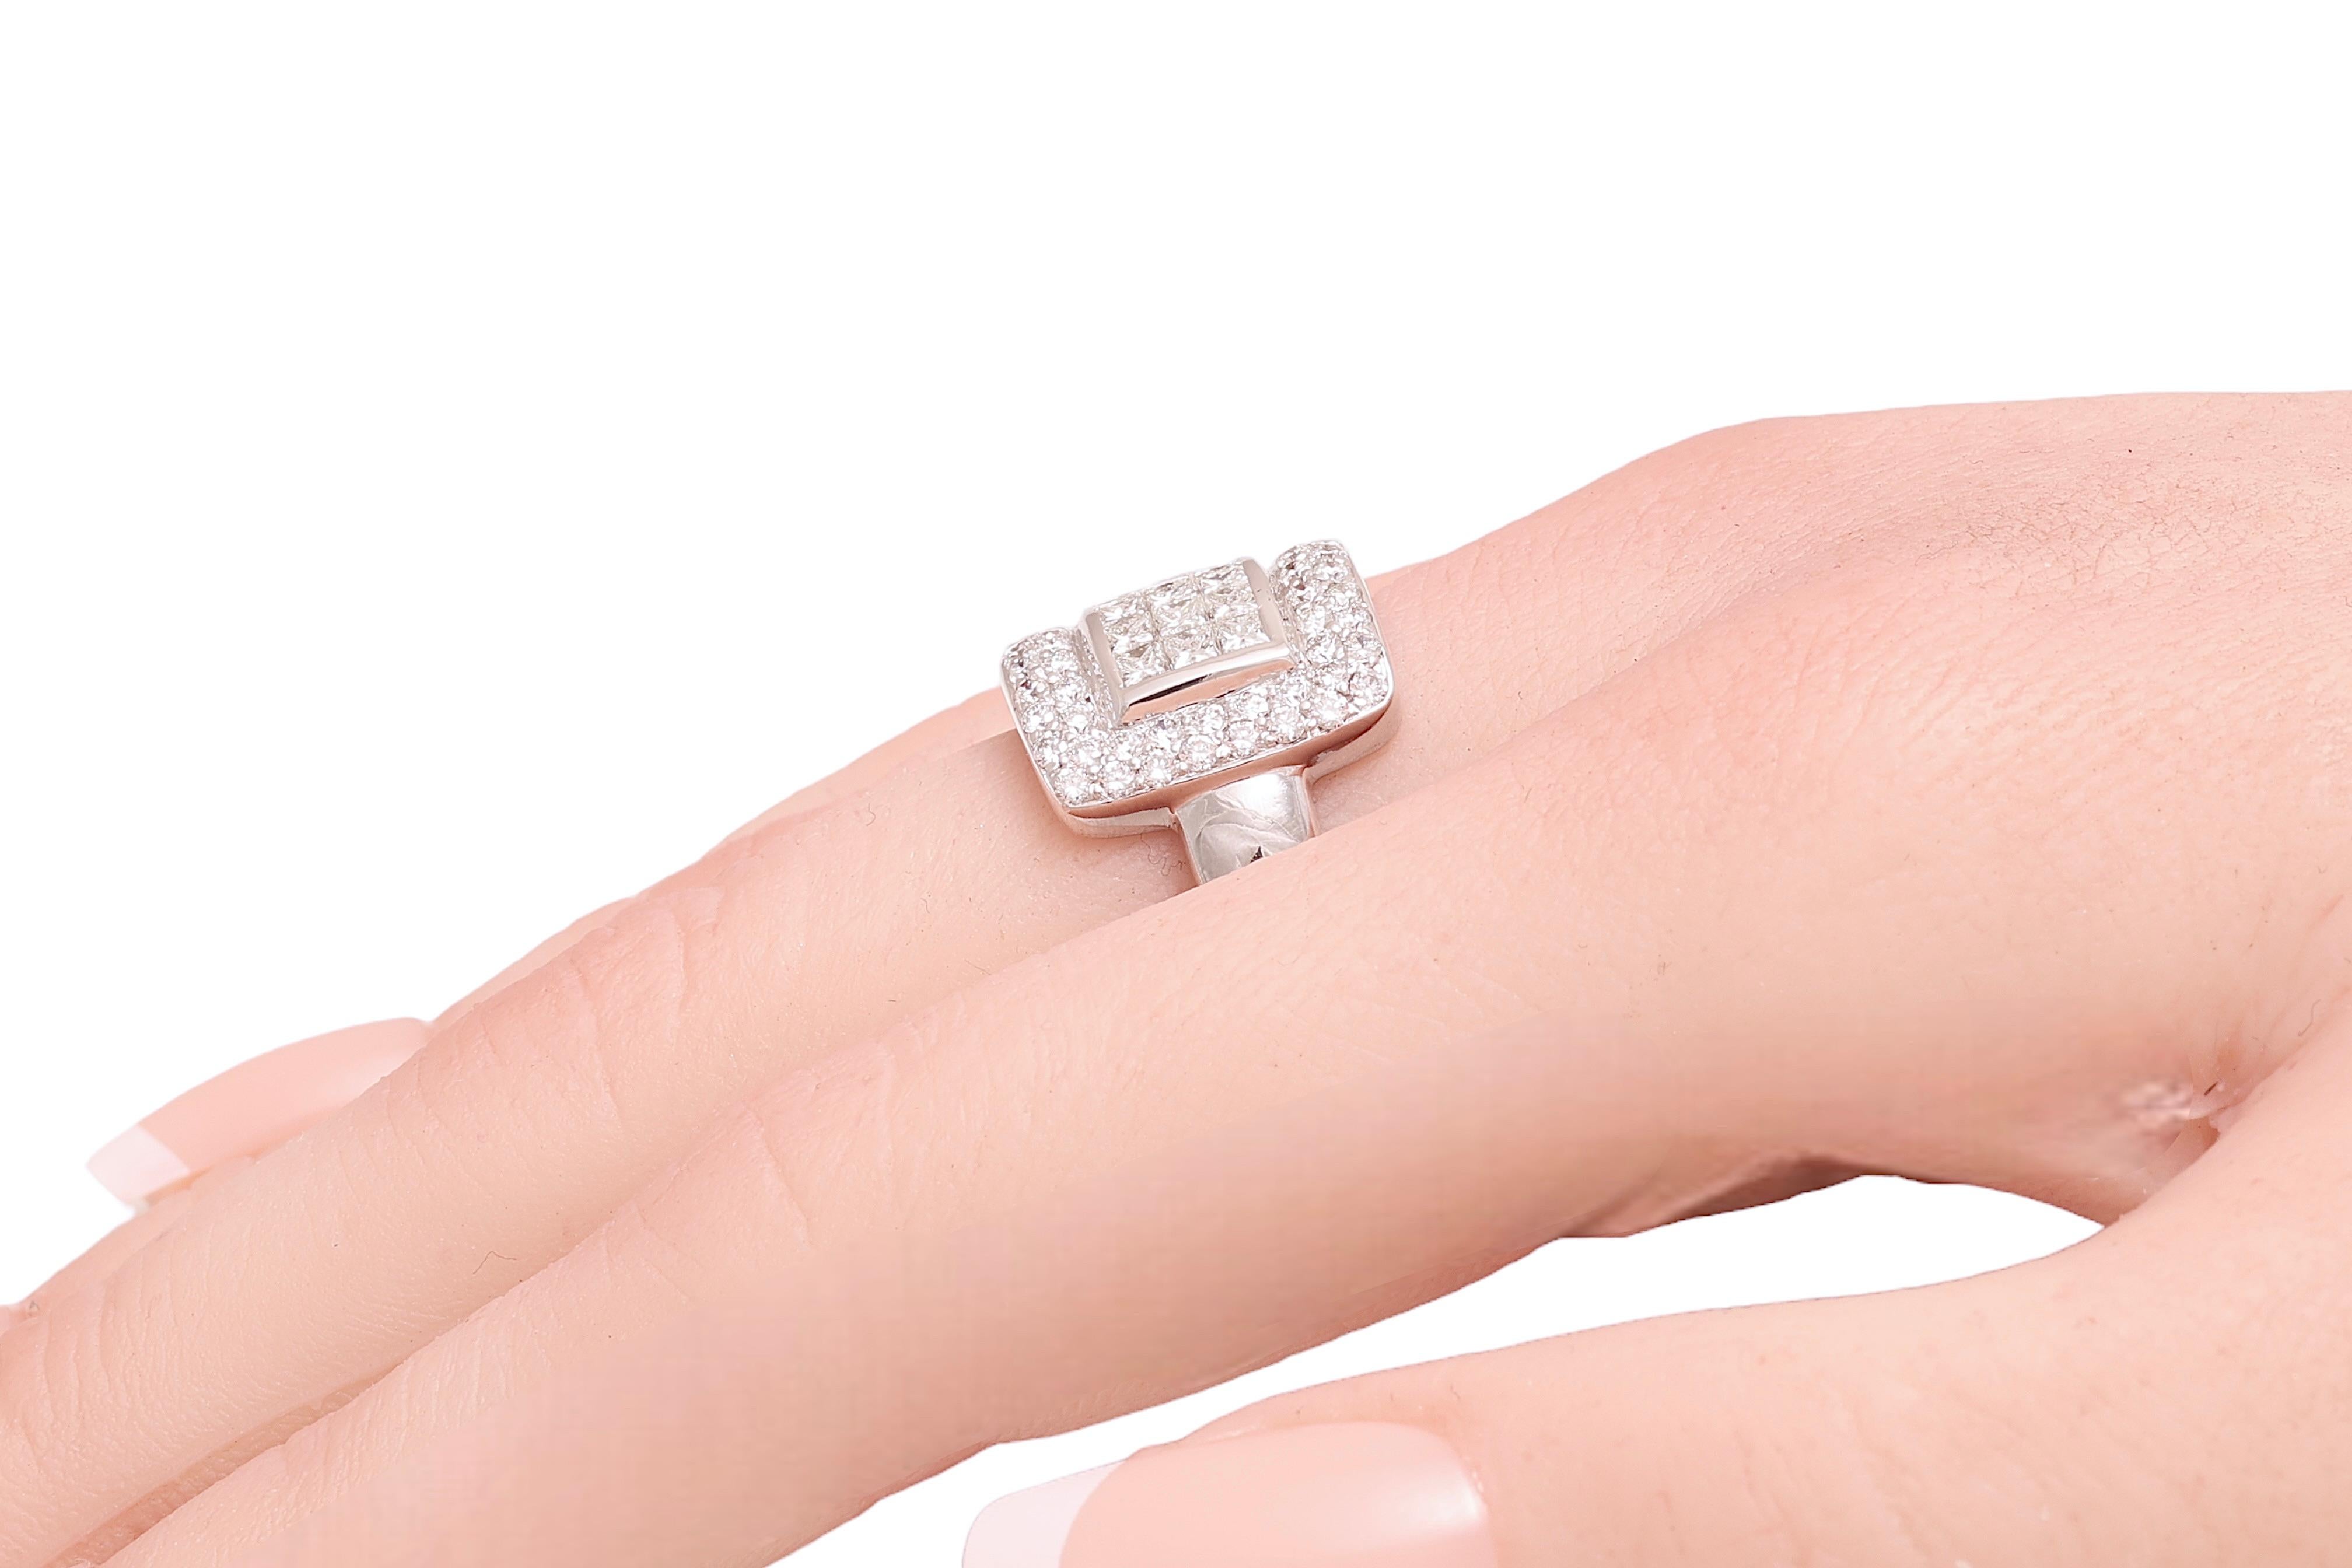  18 kt. White Gold Ring 1.74 ct. Brilliant & Invisible Princess Cut Diamonds  For Sale 3